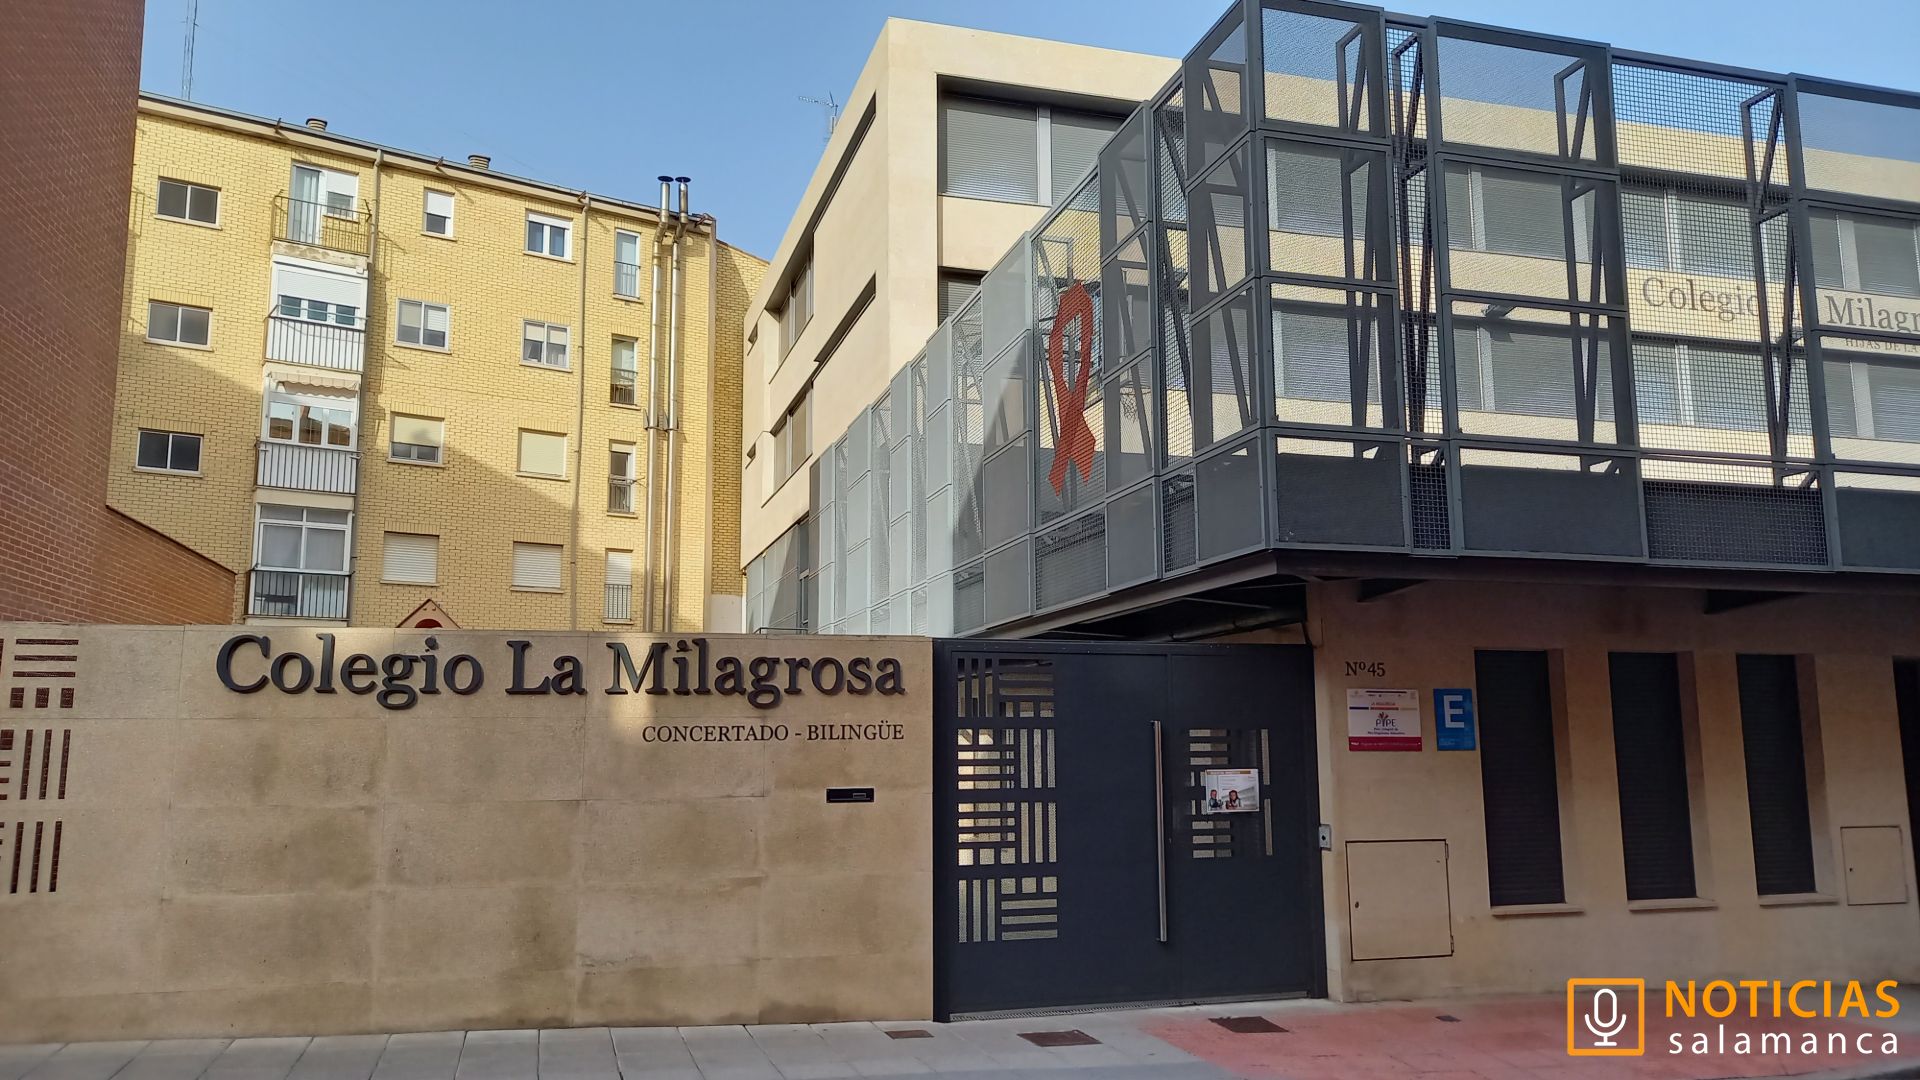 Colegio La Milagrosa - Salamanca